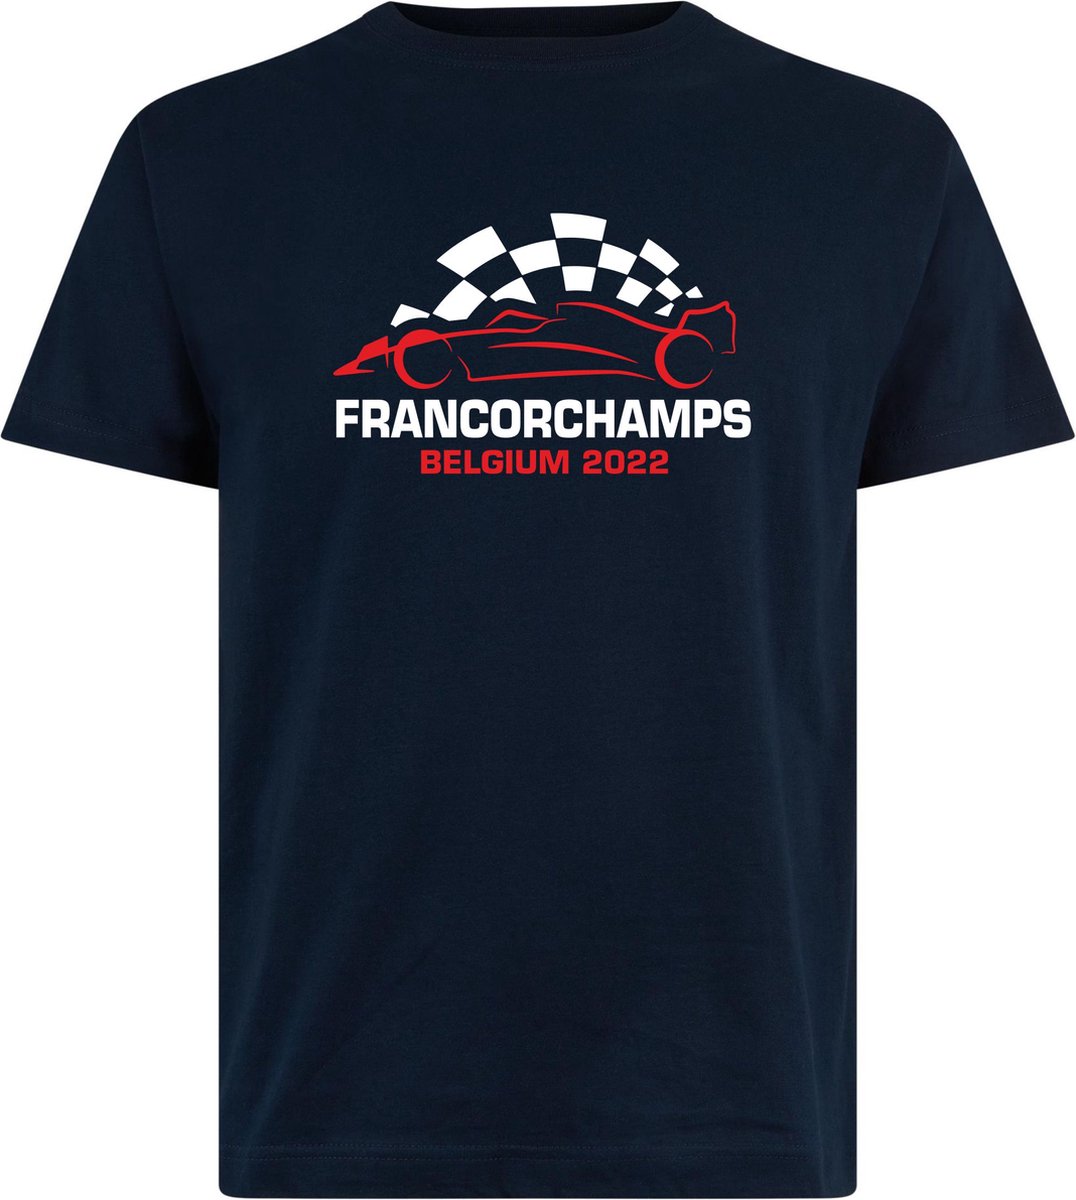 T-shirt Francorchamps Belgium 2022 met raceauto | Max Verstappen / Red Bull Racing / Formule 1 fan | Grand Prix Circuit Spa-Francorchamps | kleding shirt | Navy | maat XXL